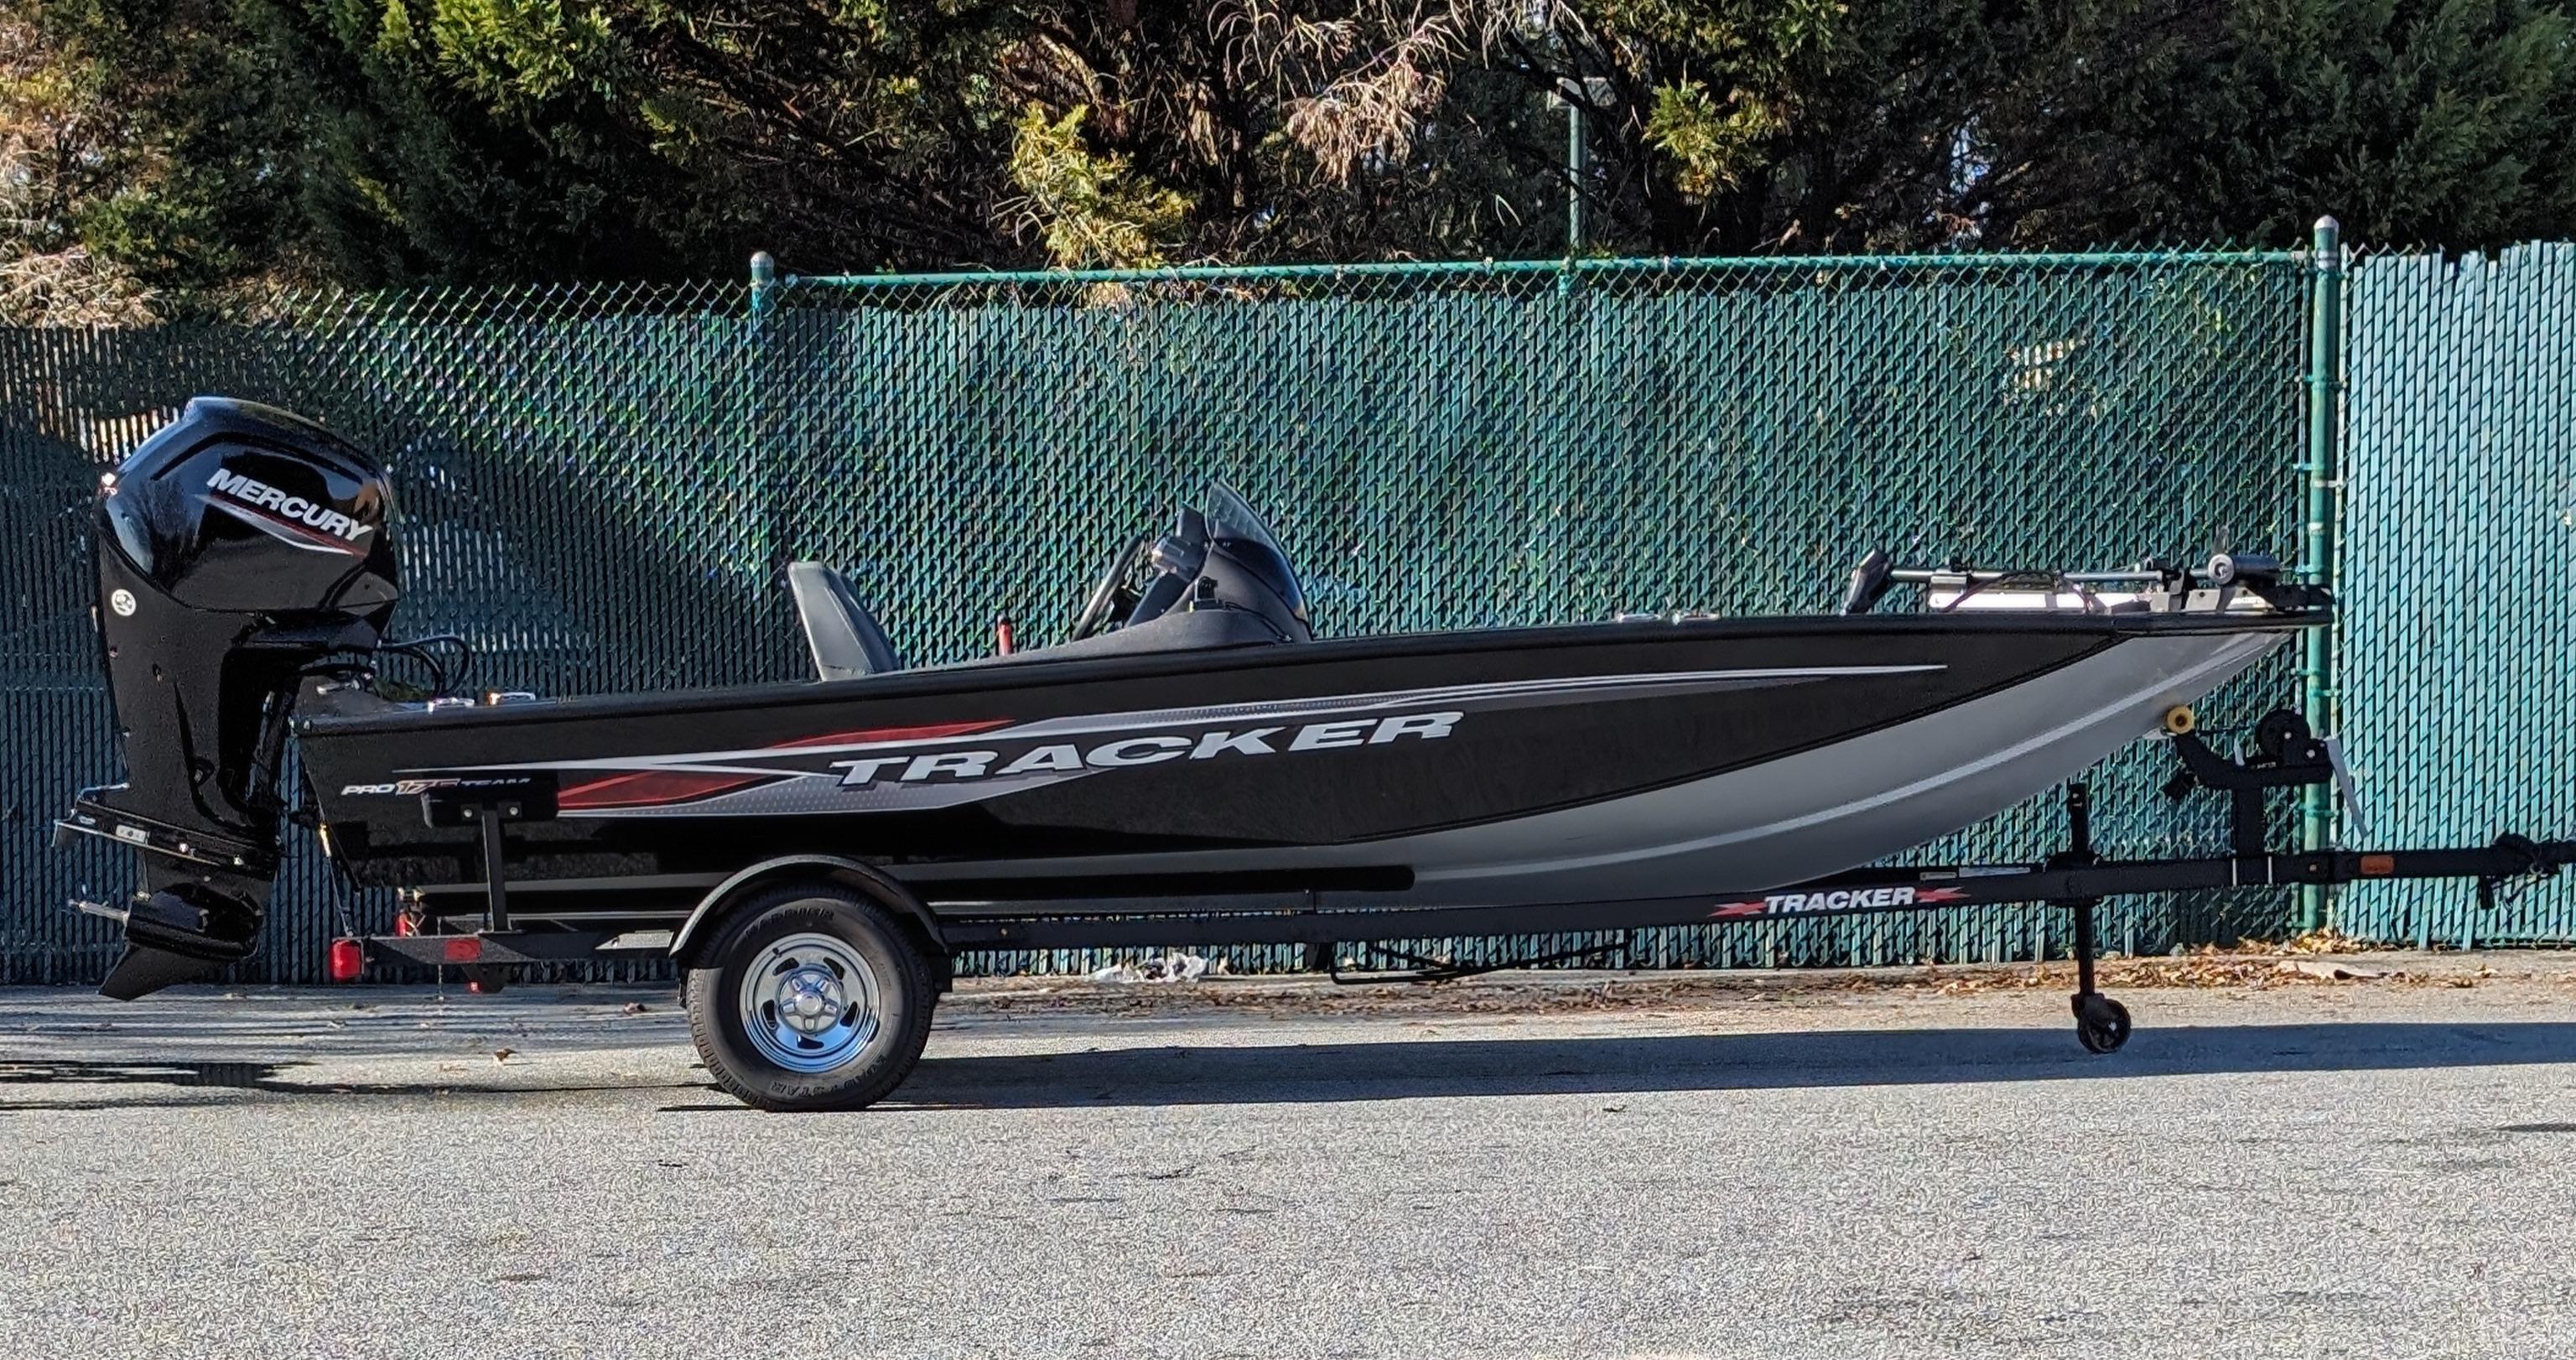 Tracker Pro Team 175 Txw boats for sale in Georgia - Boat Trader